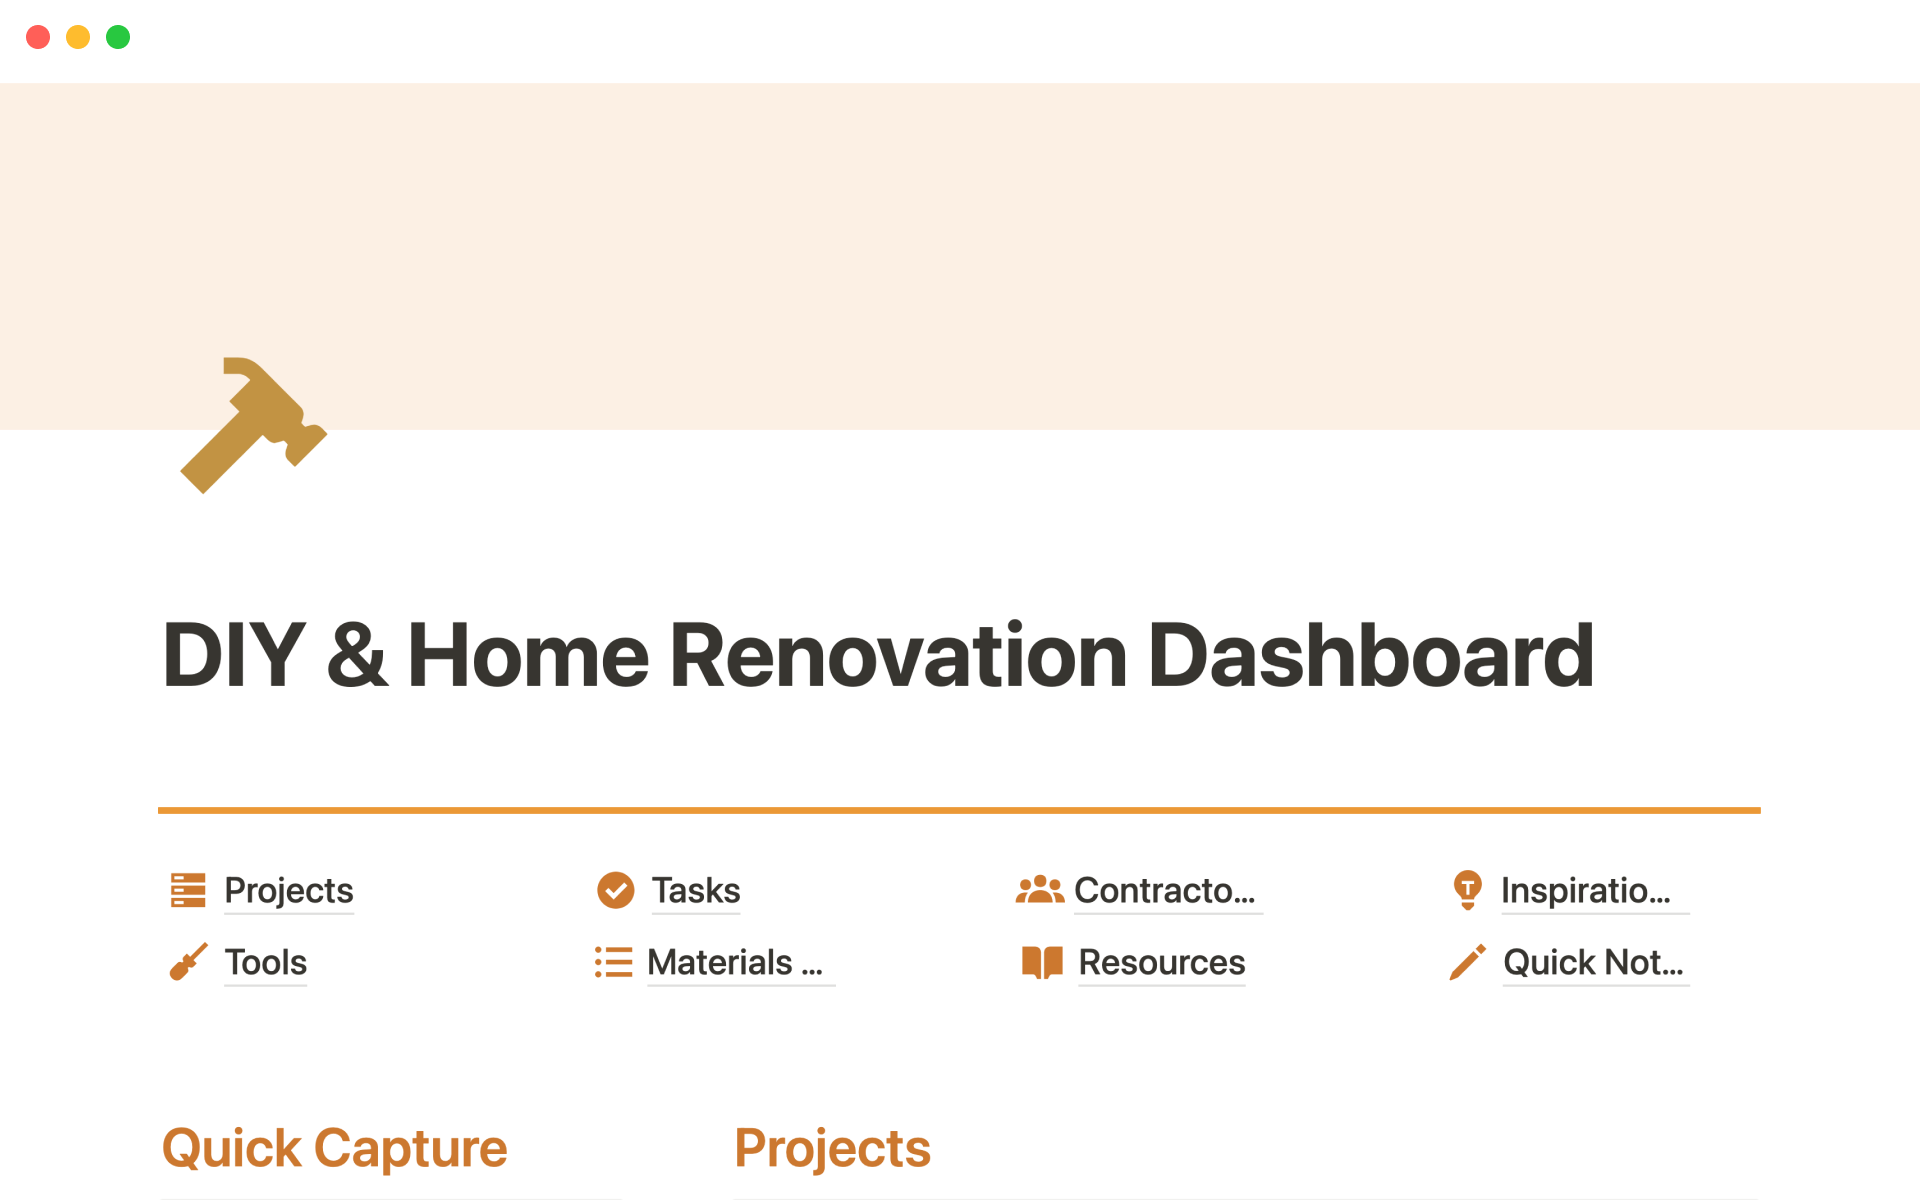 Aperçu du modèle de DIY & Home Renovation Dashboard